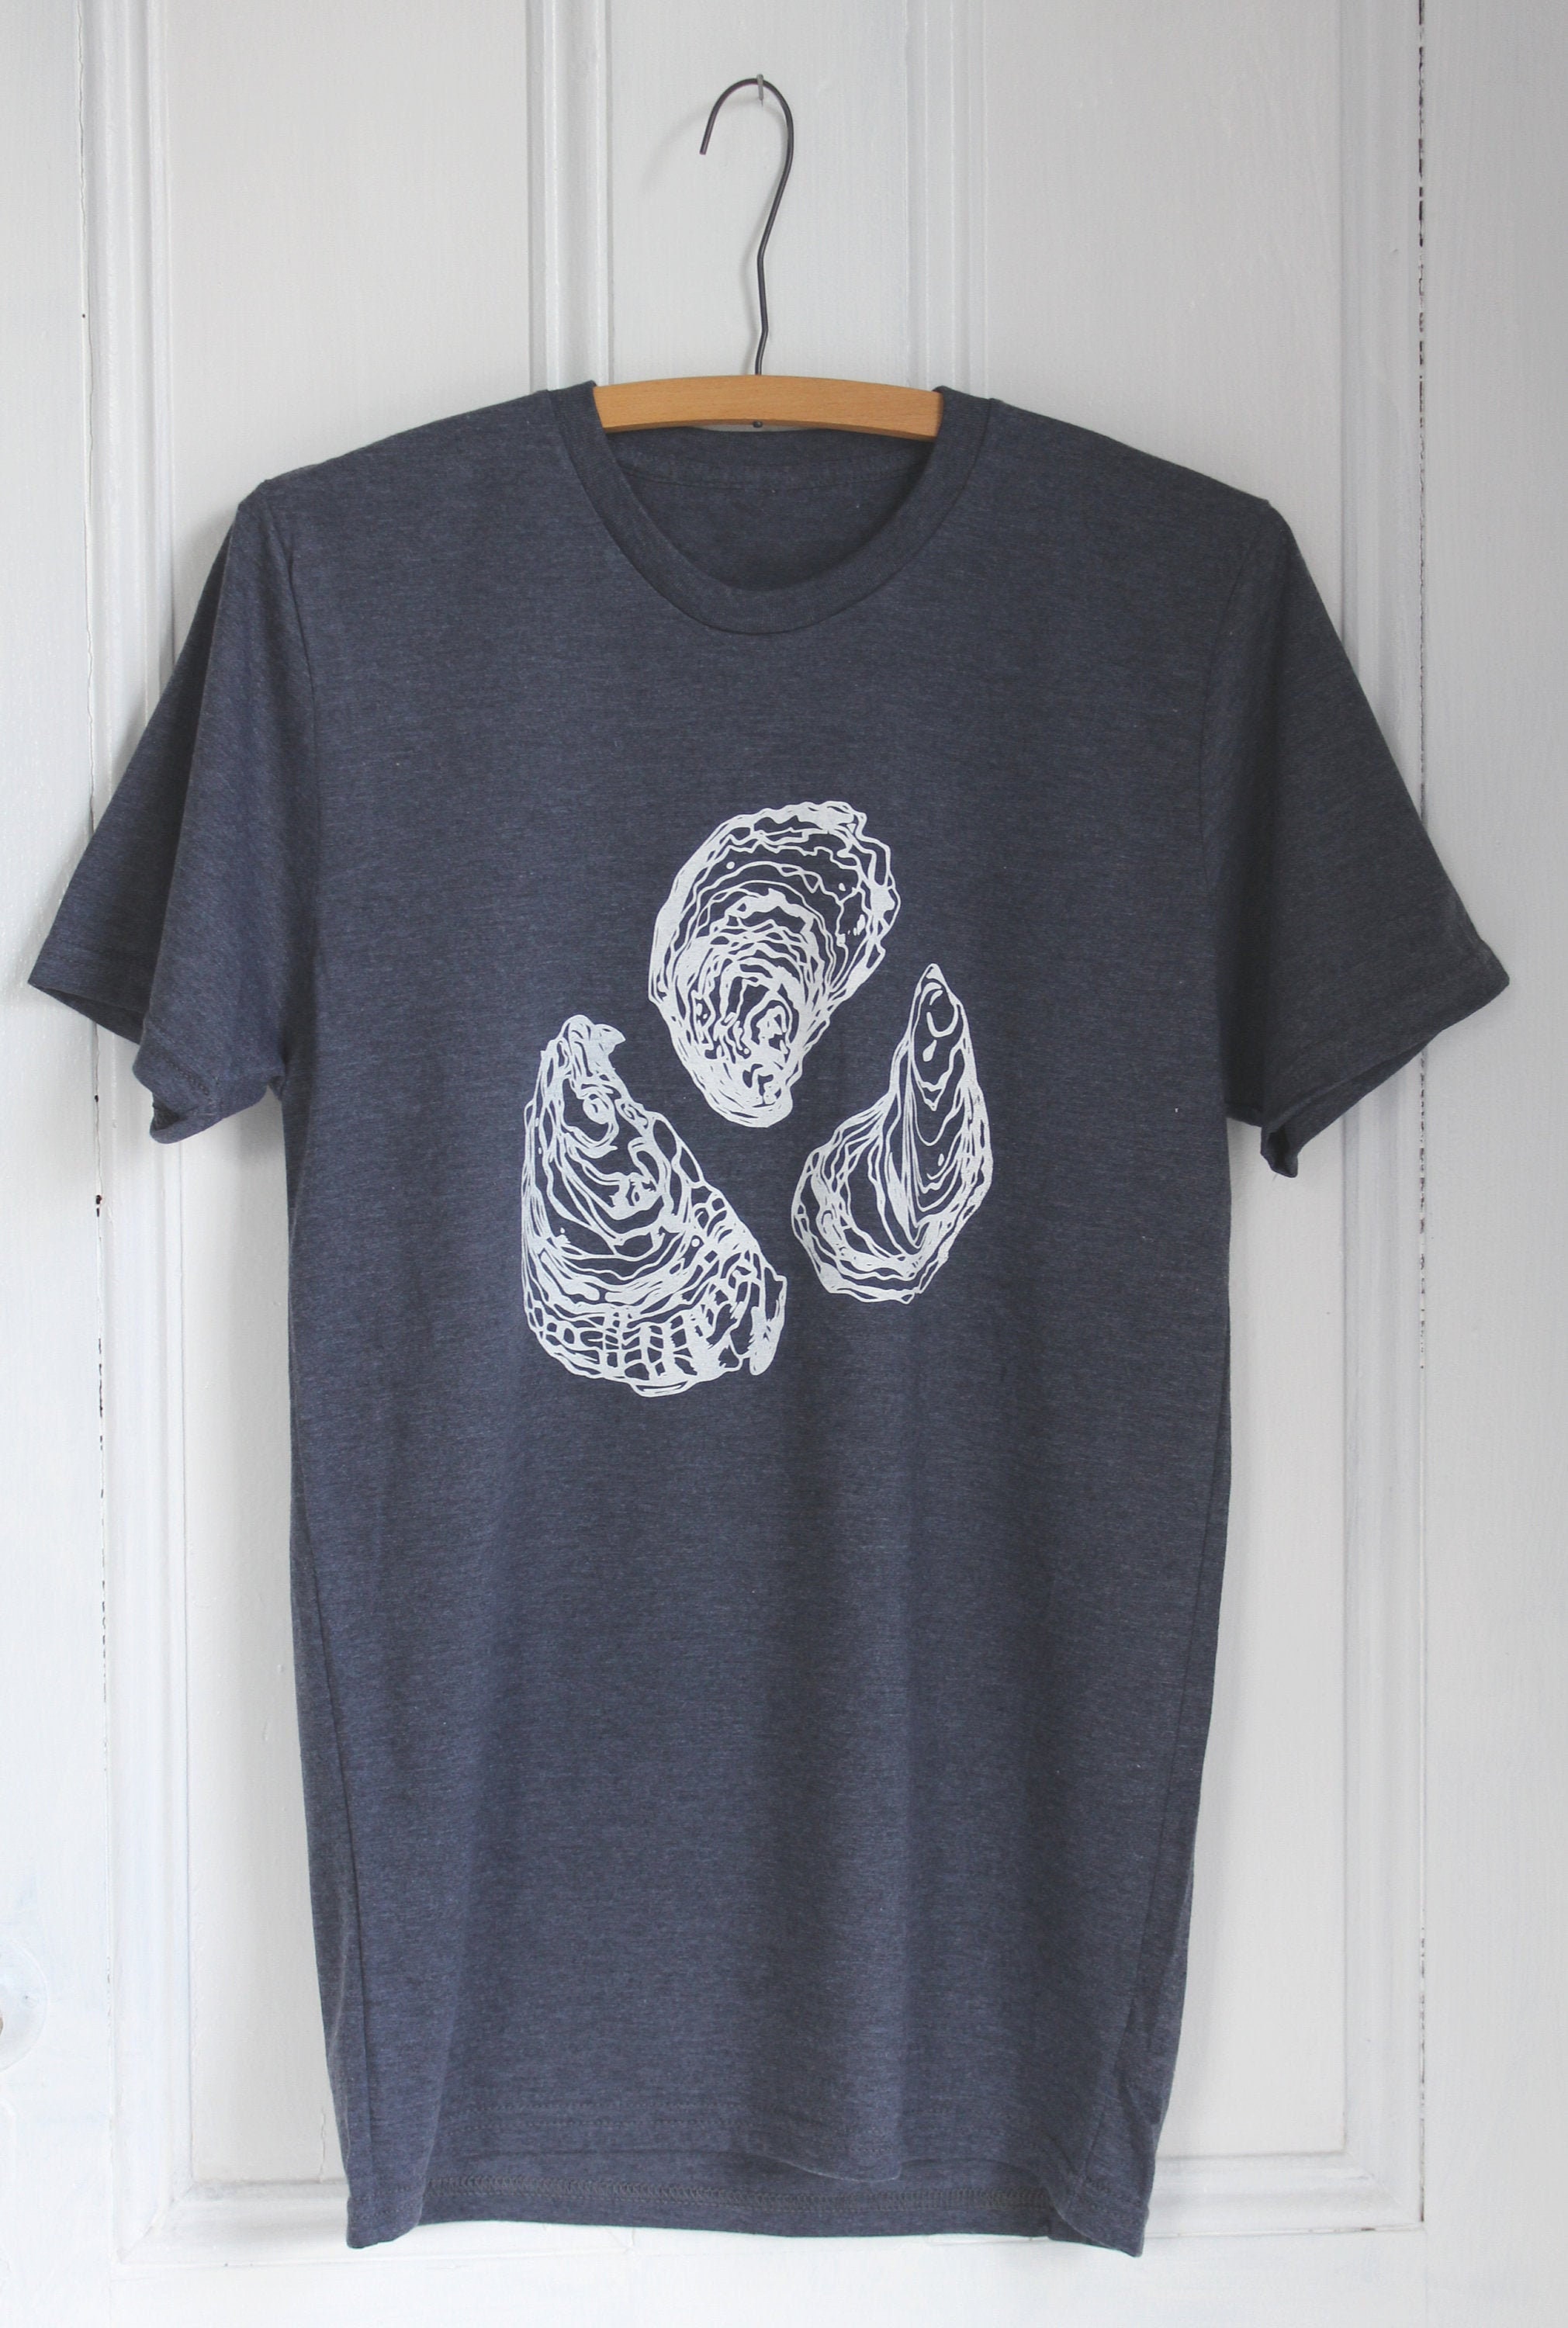 Mens Oyster T Shirt - Organic Tri-Blend Hand Screen Print Men's T-Shirts Graphic T-Shirt Slow Fashion Eco